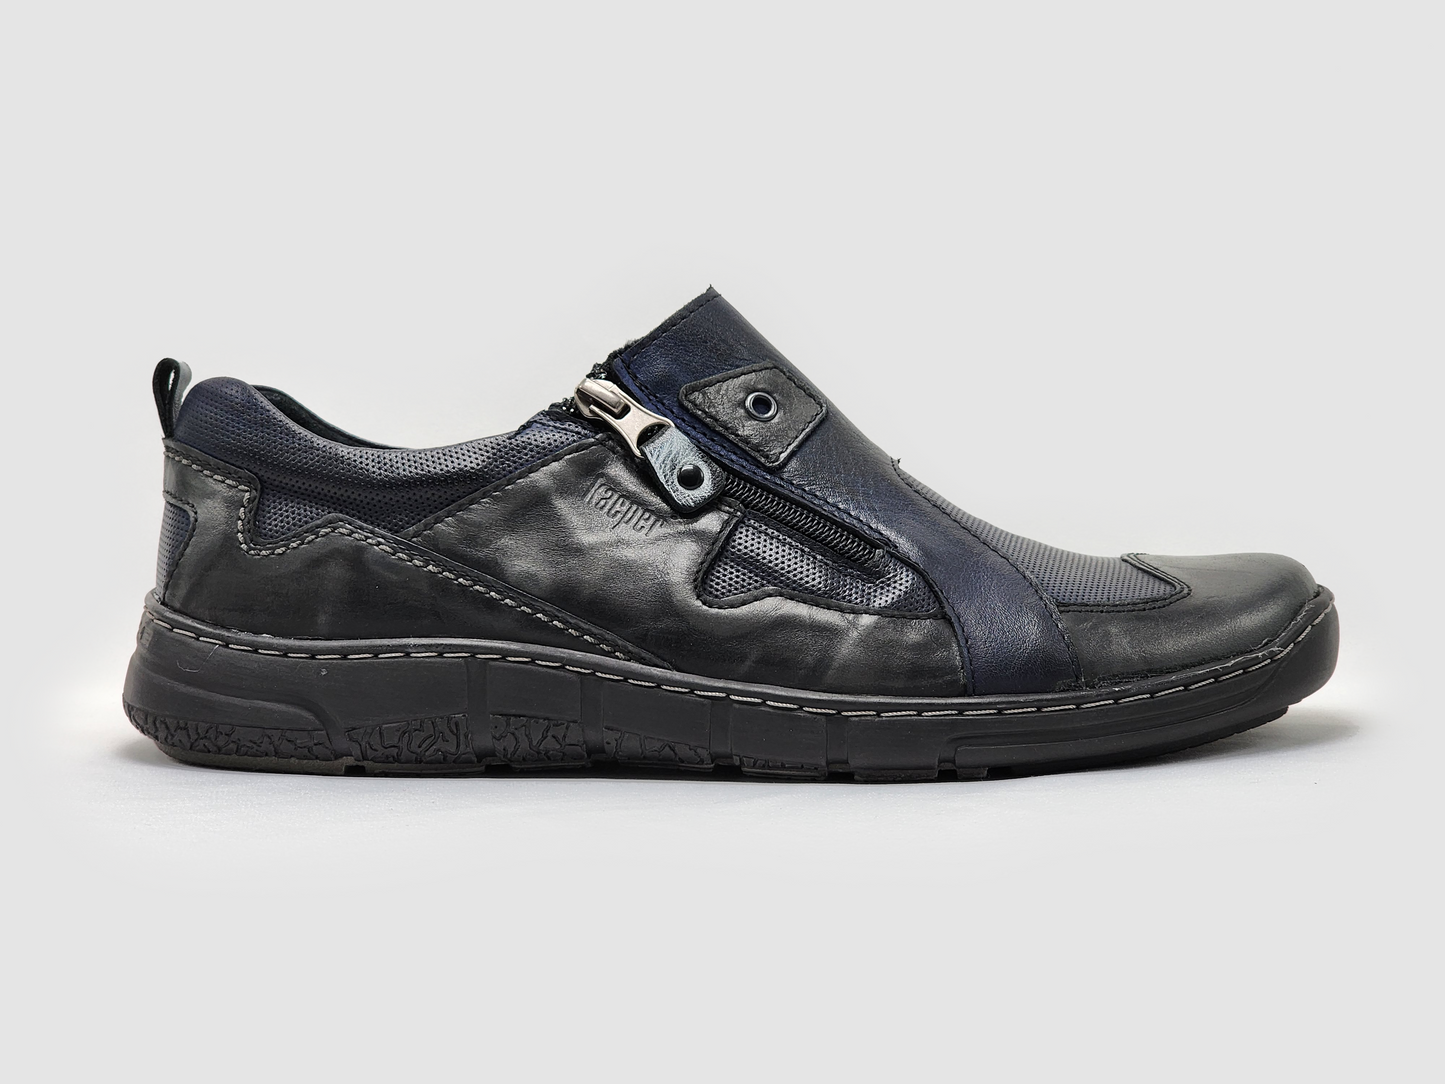 Men's Everyday Slip-On Leather Shoes - Black/Navy - Kacper Global Shoes 